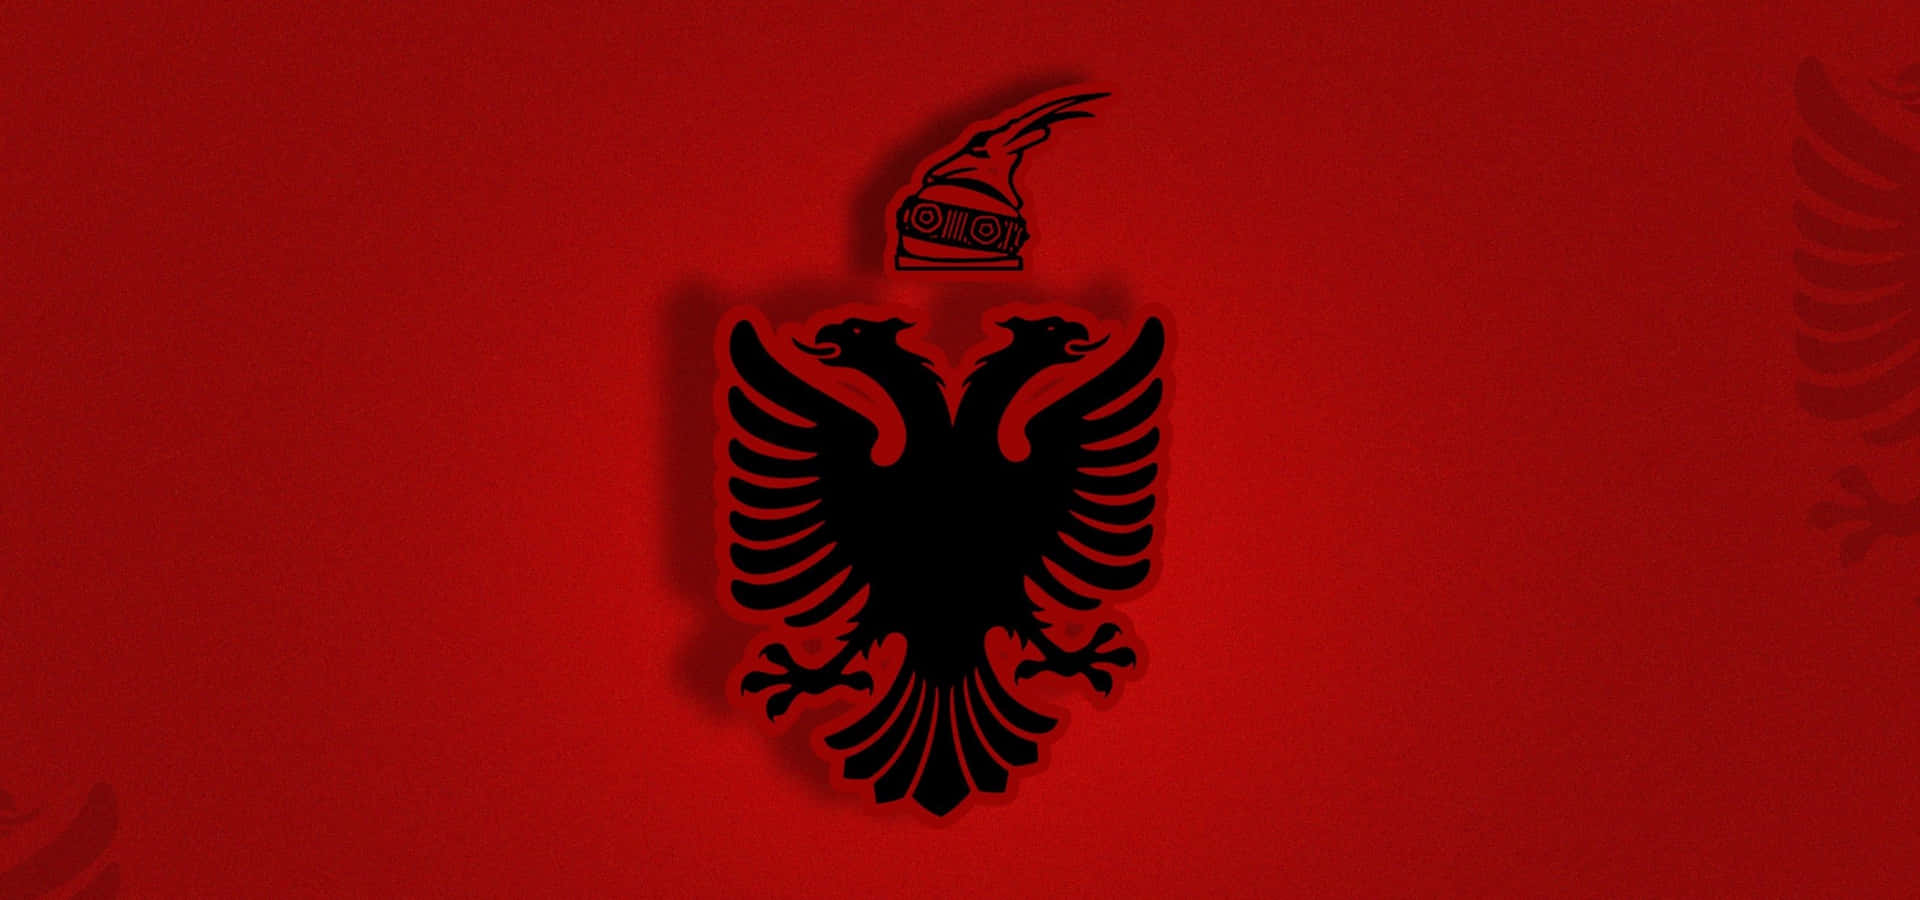 Njutav Albanias Pittoreska Skönhet.